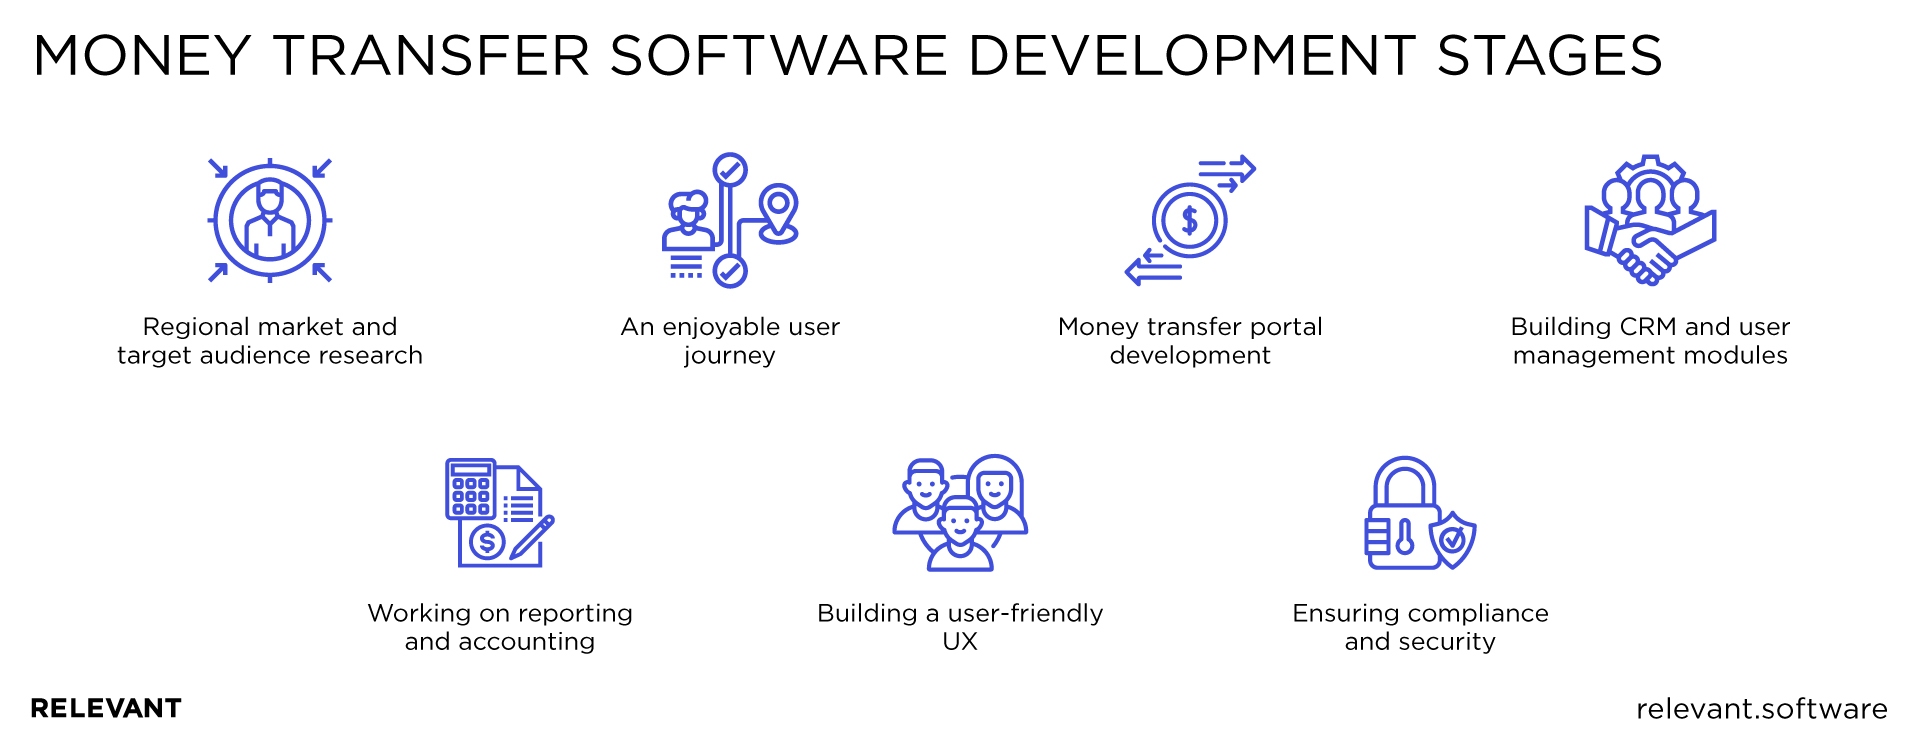 money transfer software development stages